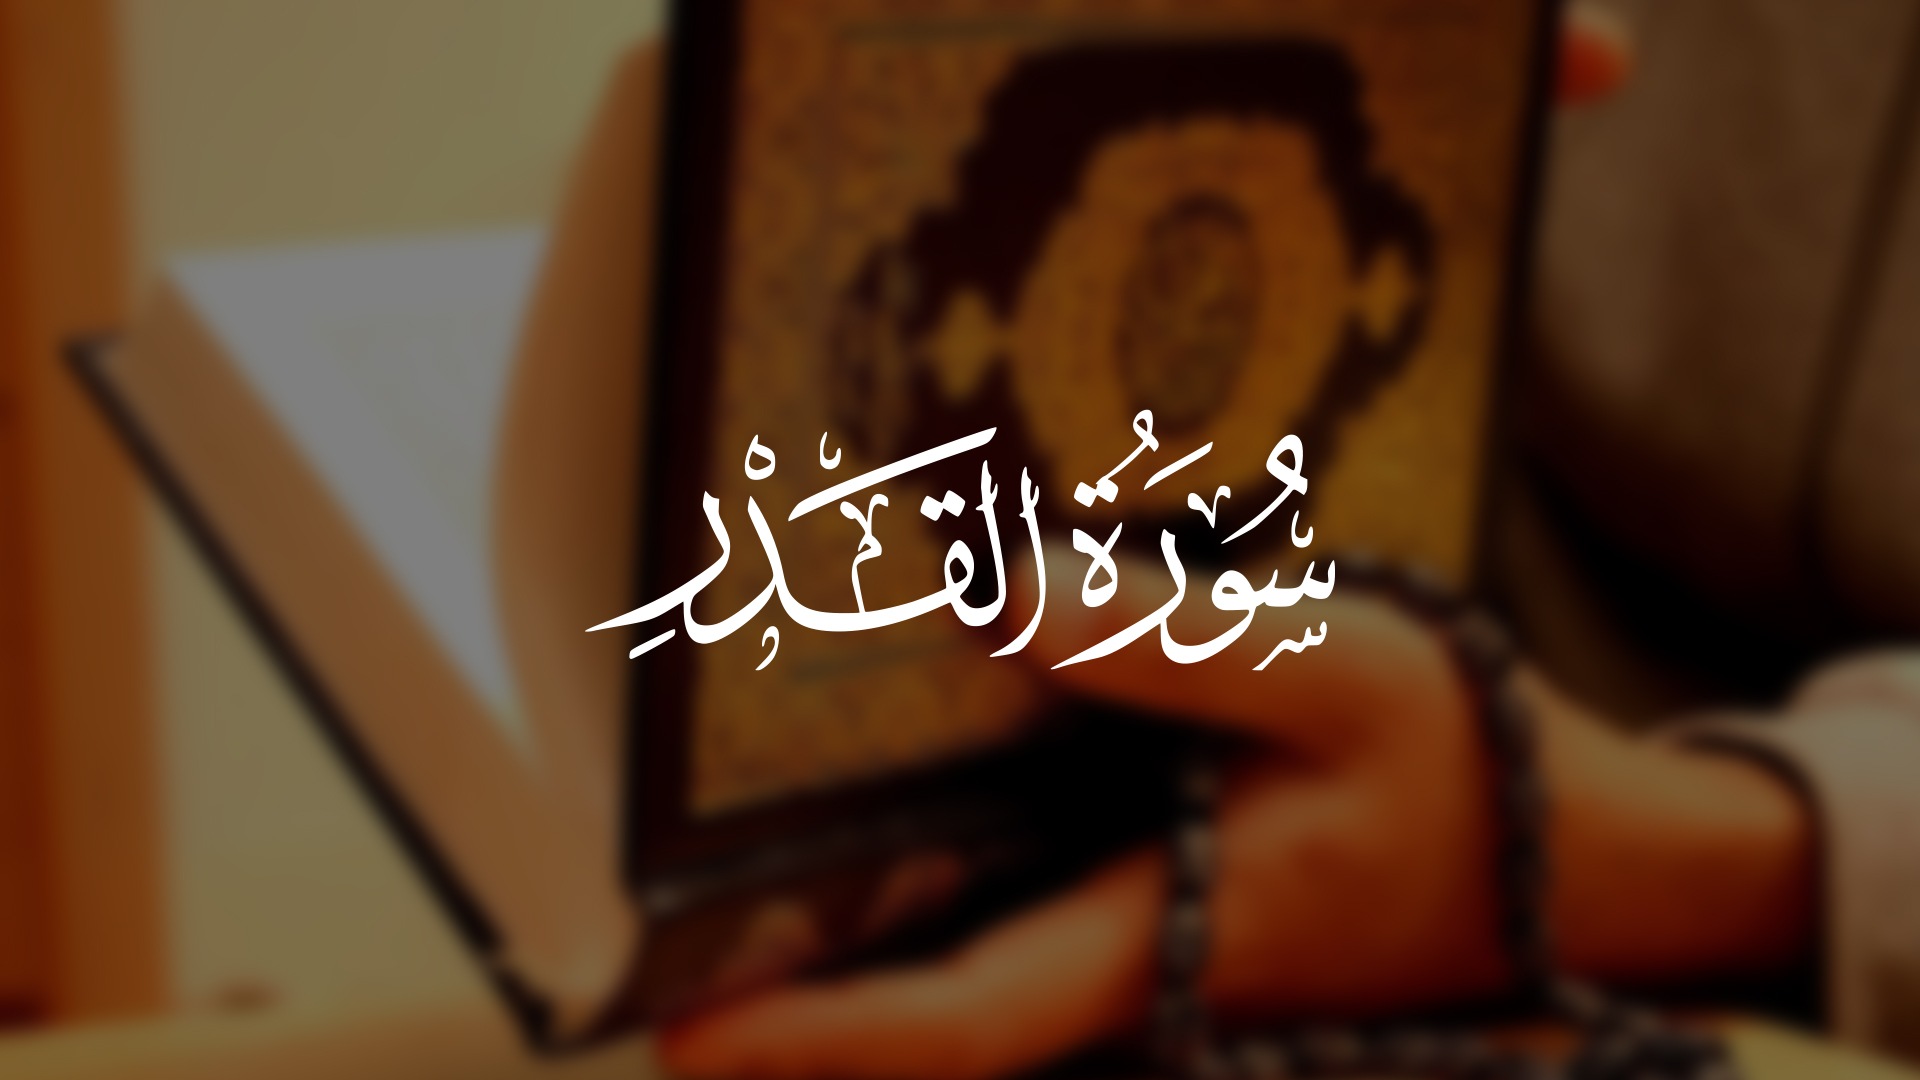 Какую суру читают в ночь кадр. Чтение Корана от колдовства. 80 Сура Корана. Коран ютуб.